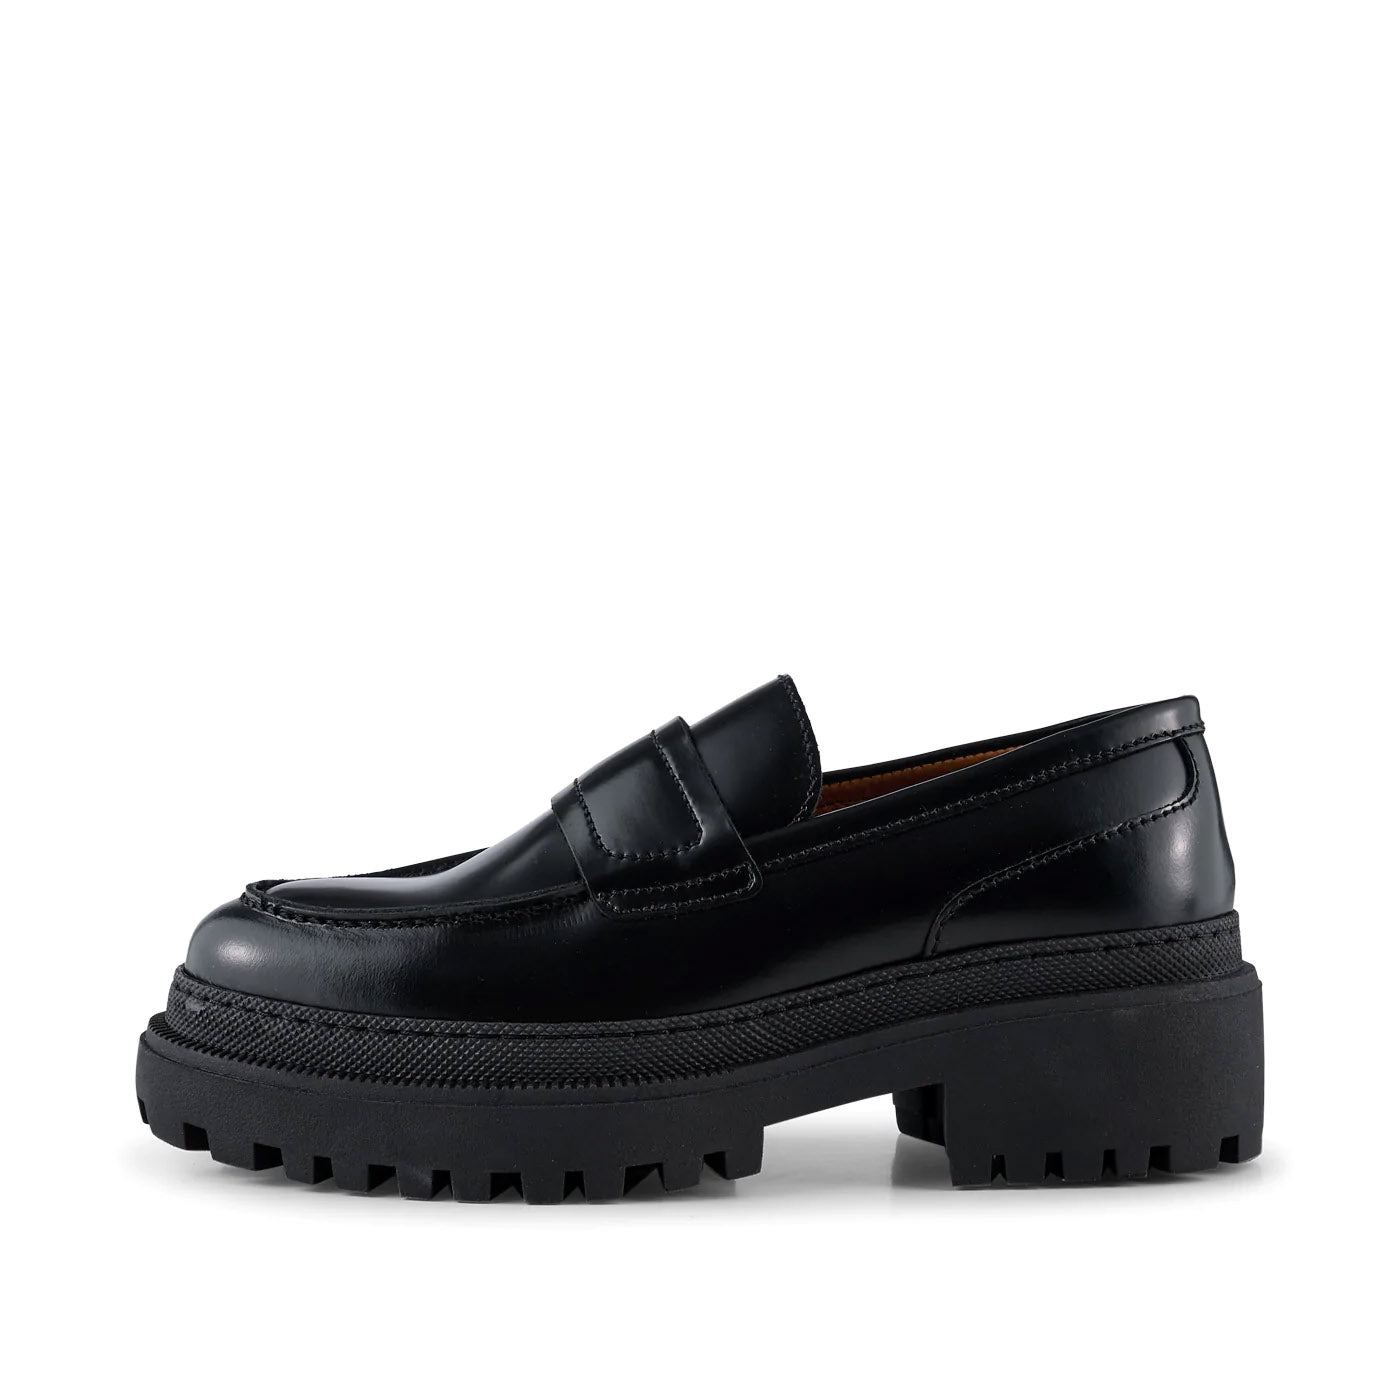 SHOE THE BEAR WOMENS Iona loafer leather Loafers 817 BLACK POLIDO HIGH SHINE